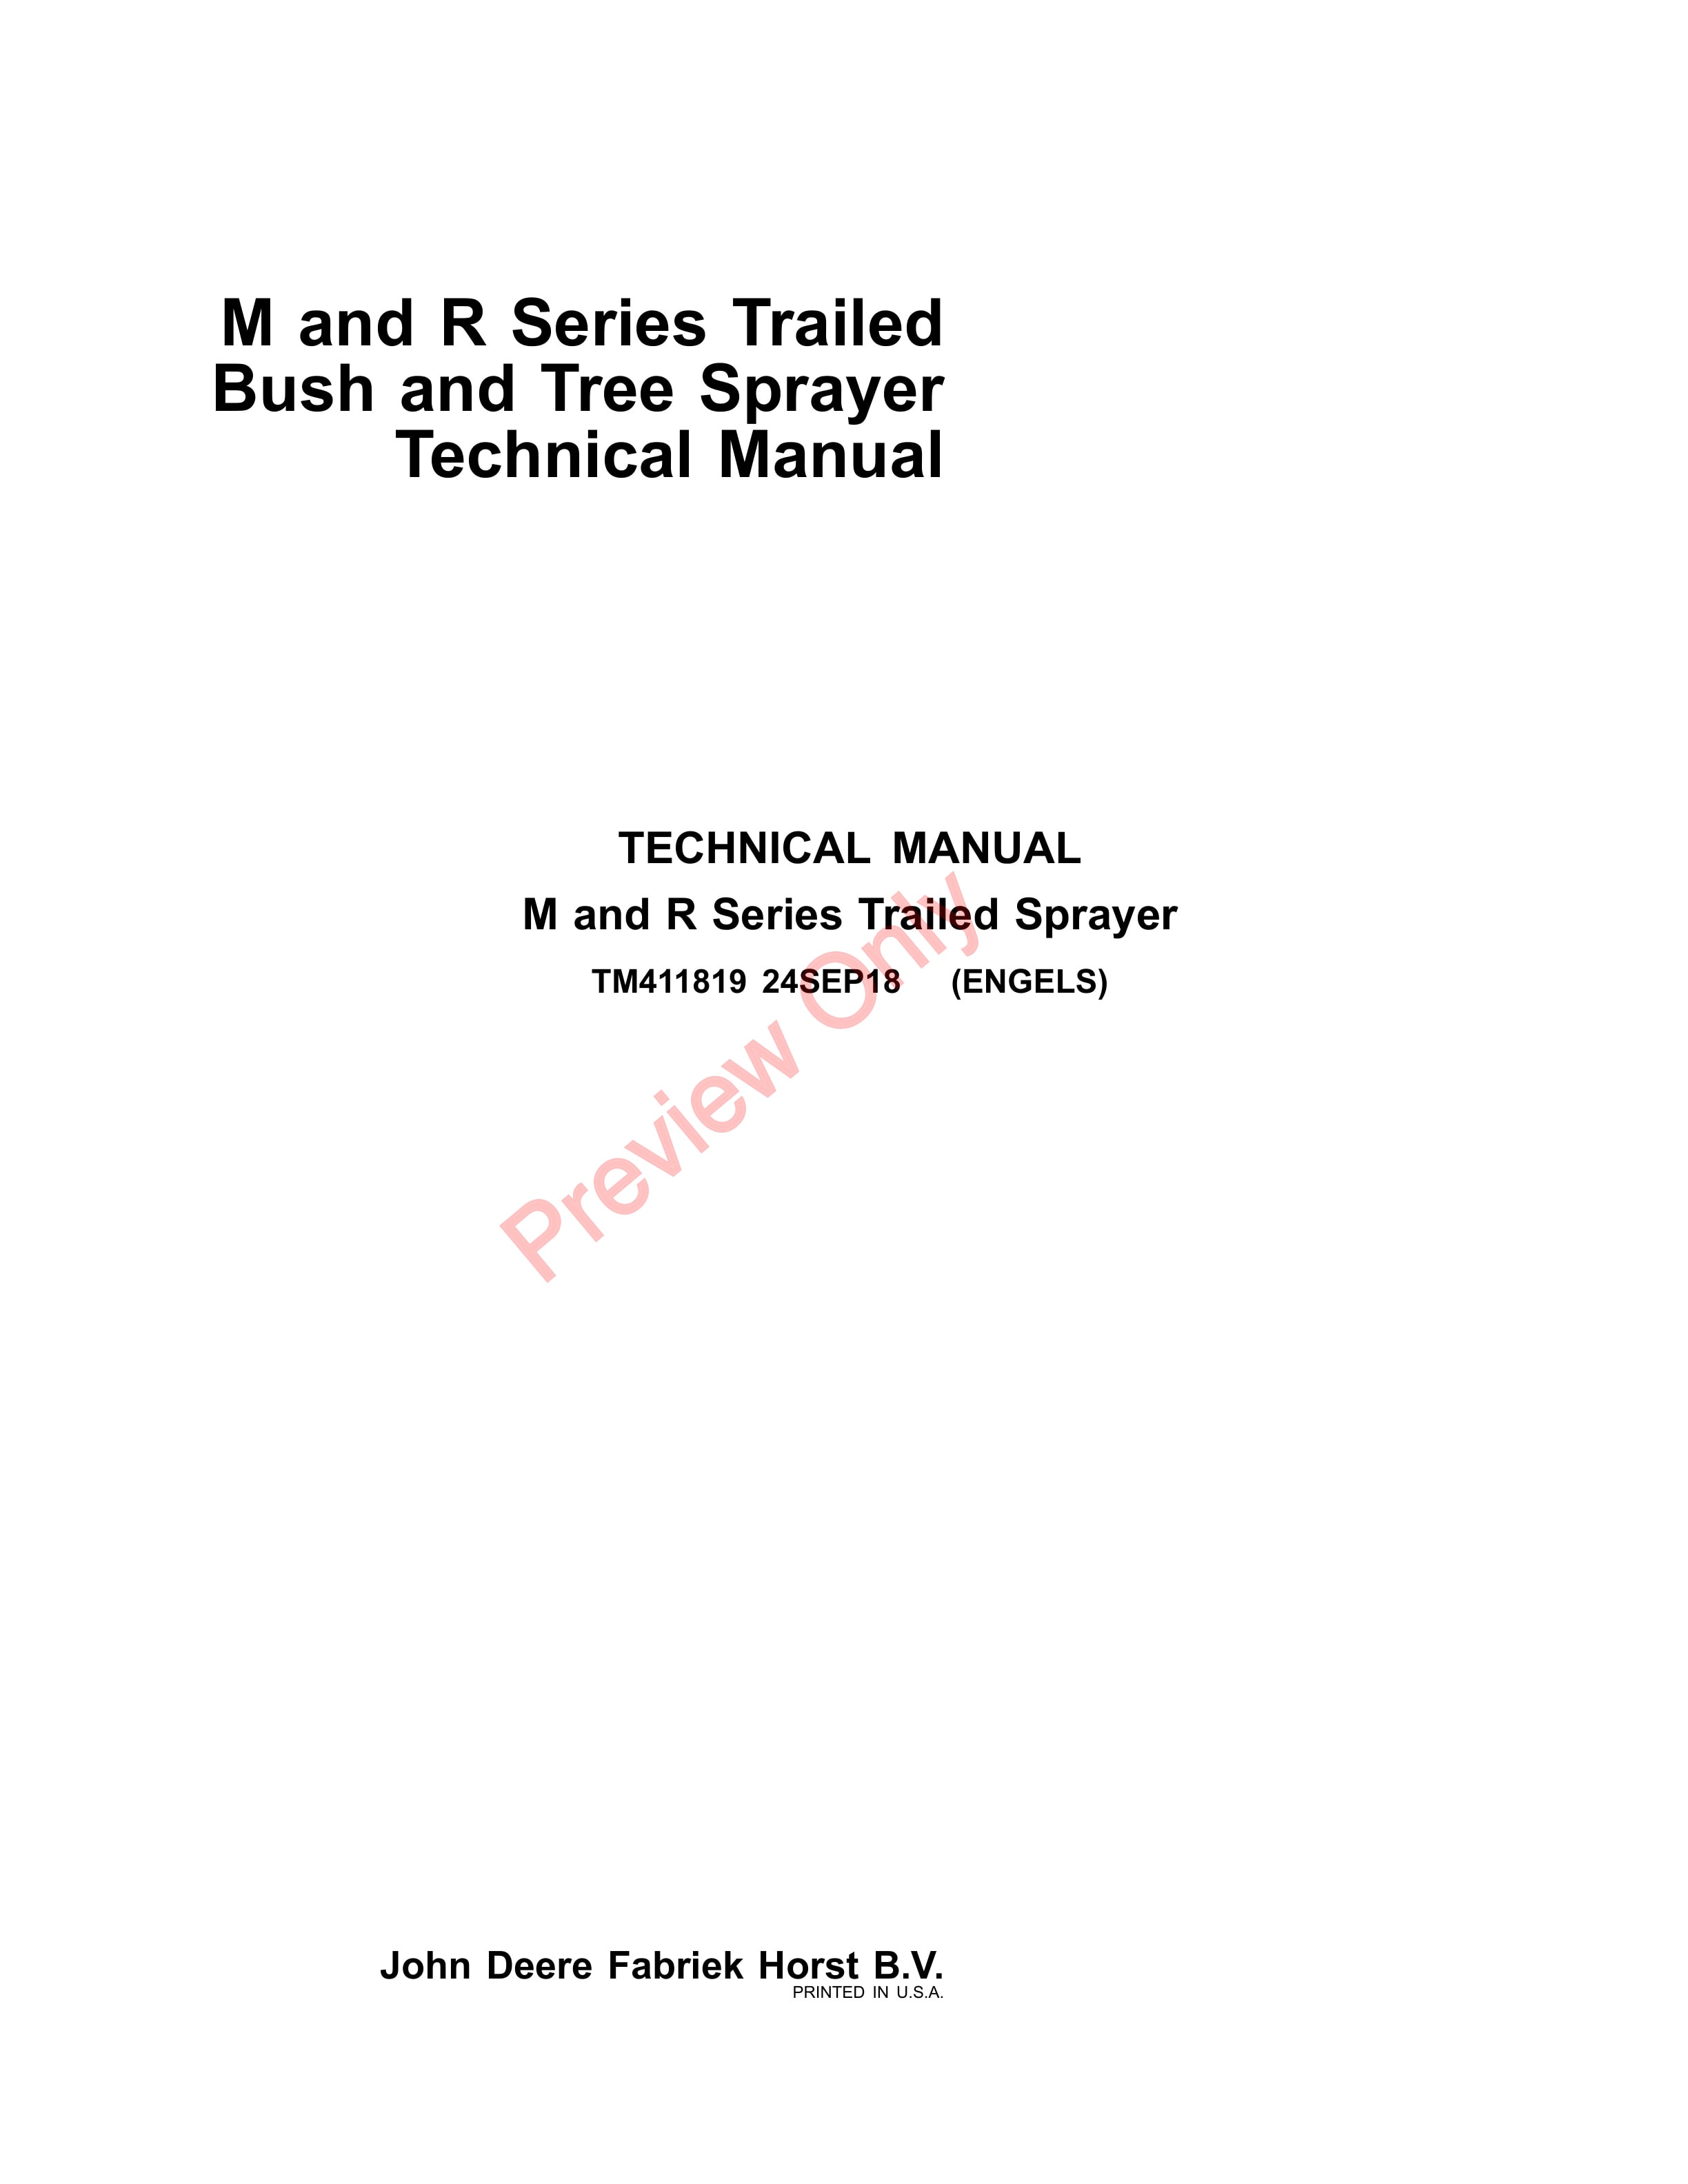 John Deere M110, M115, M120, M130, M220, M230, R110, R115, R120, R130, R310, R315 and R320 (M and R Series) Trailed Bush and Tree Sprayers Technical Manual TM411819 24SEP18-1